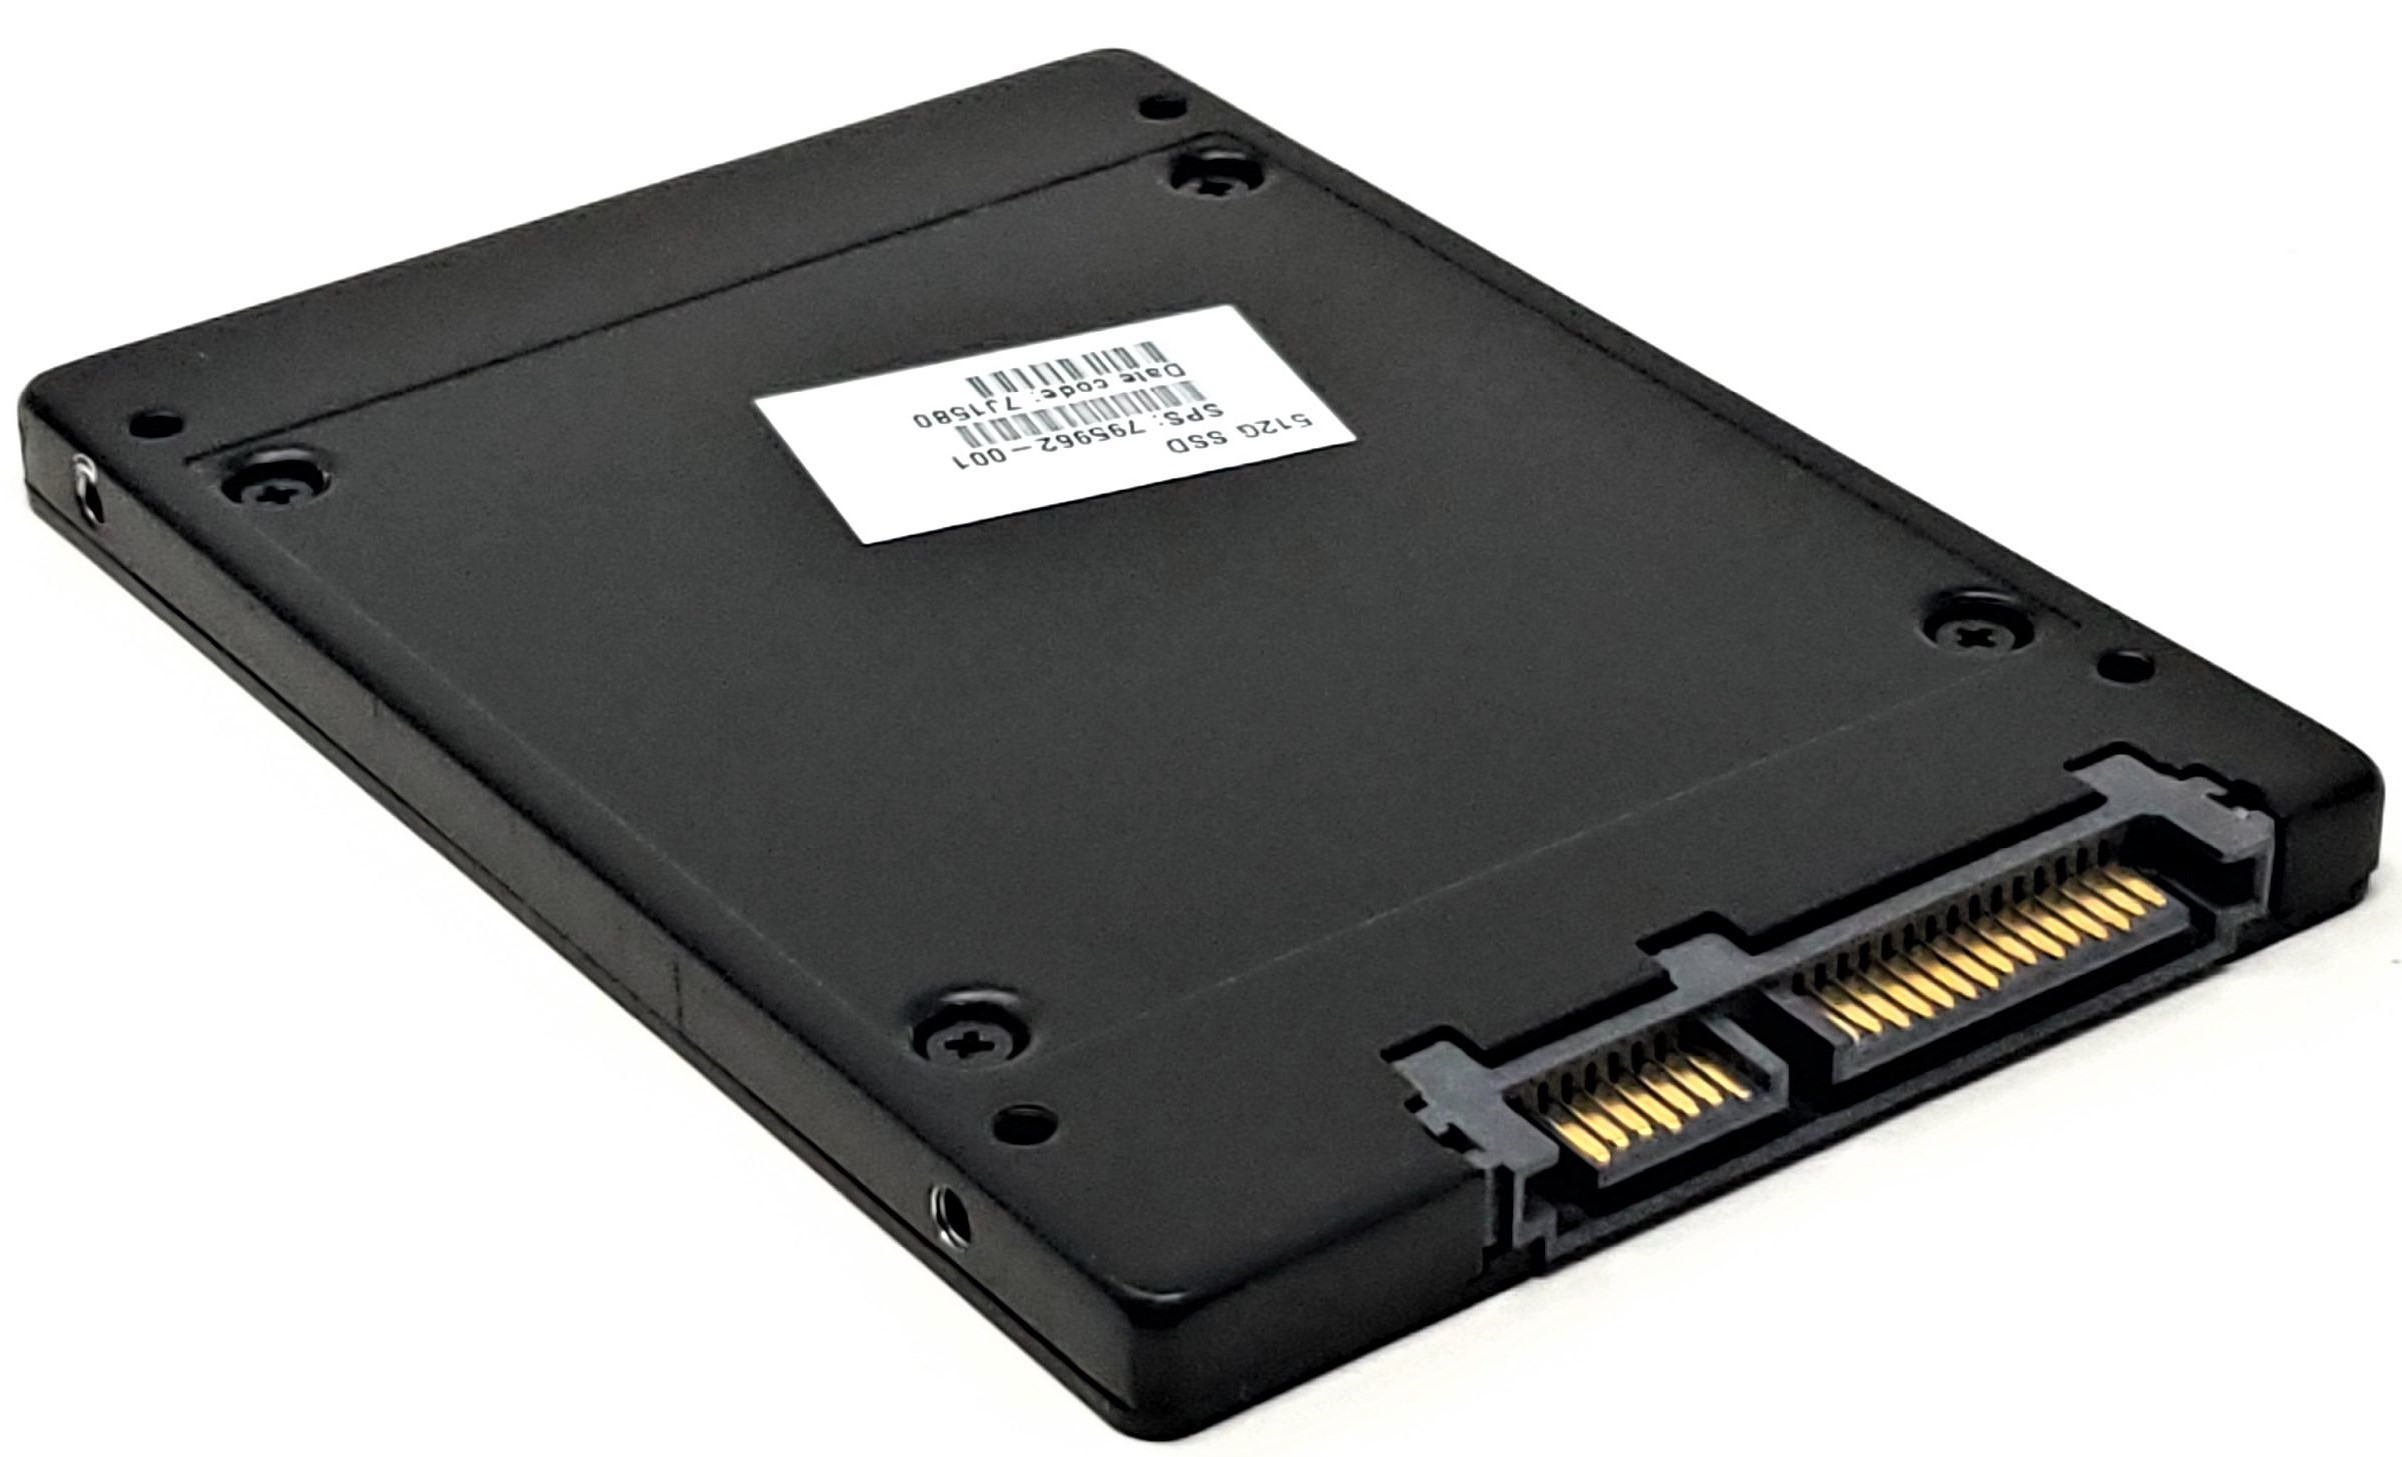 SanDisk SD8TB8U-512G-1001 - 512GB 6Gbps SATA III 7mm 2.5 Solid State SSD